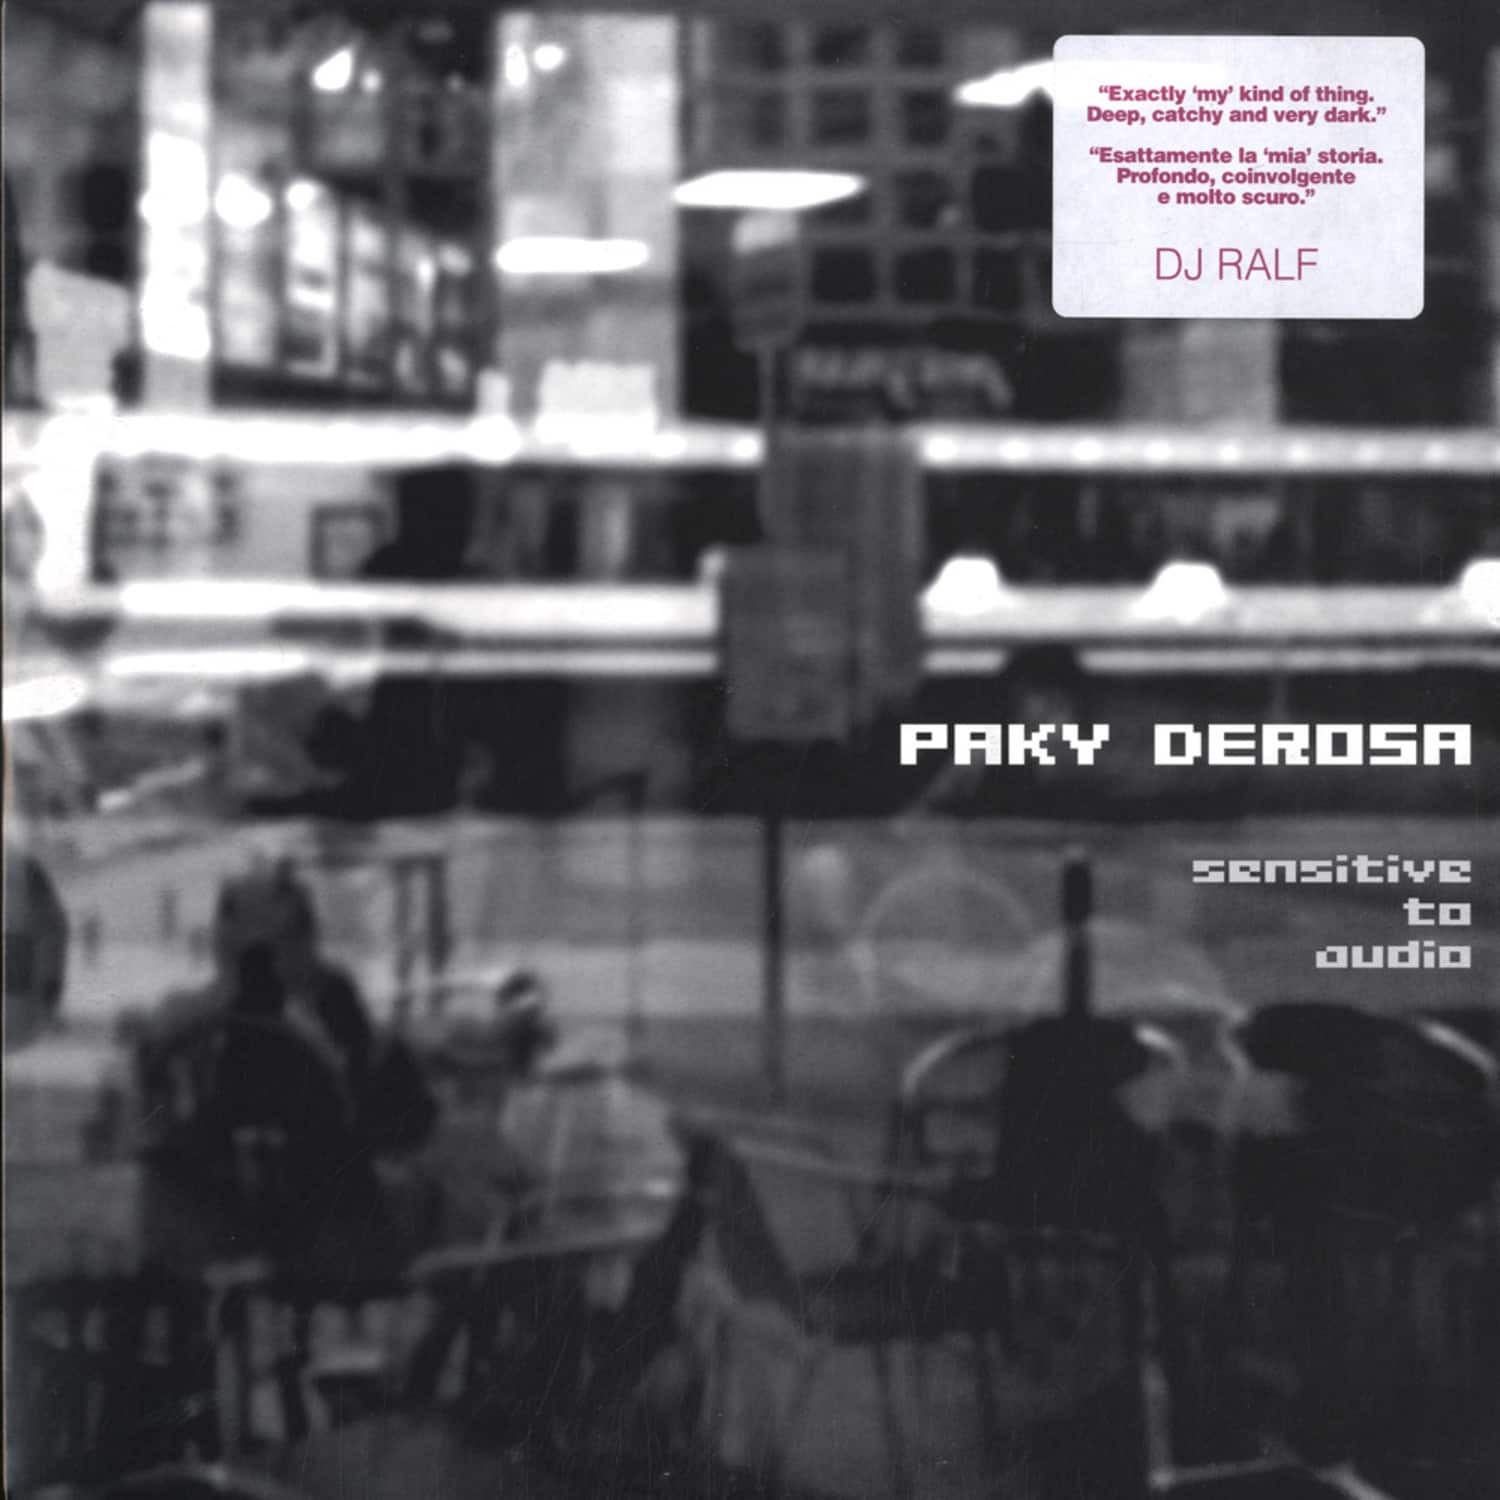 Paky Derosa - SENSITIVE TO AUDIO